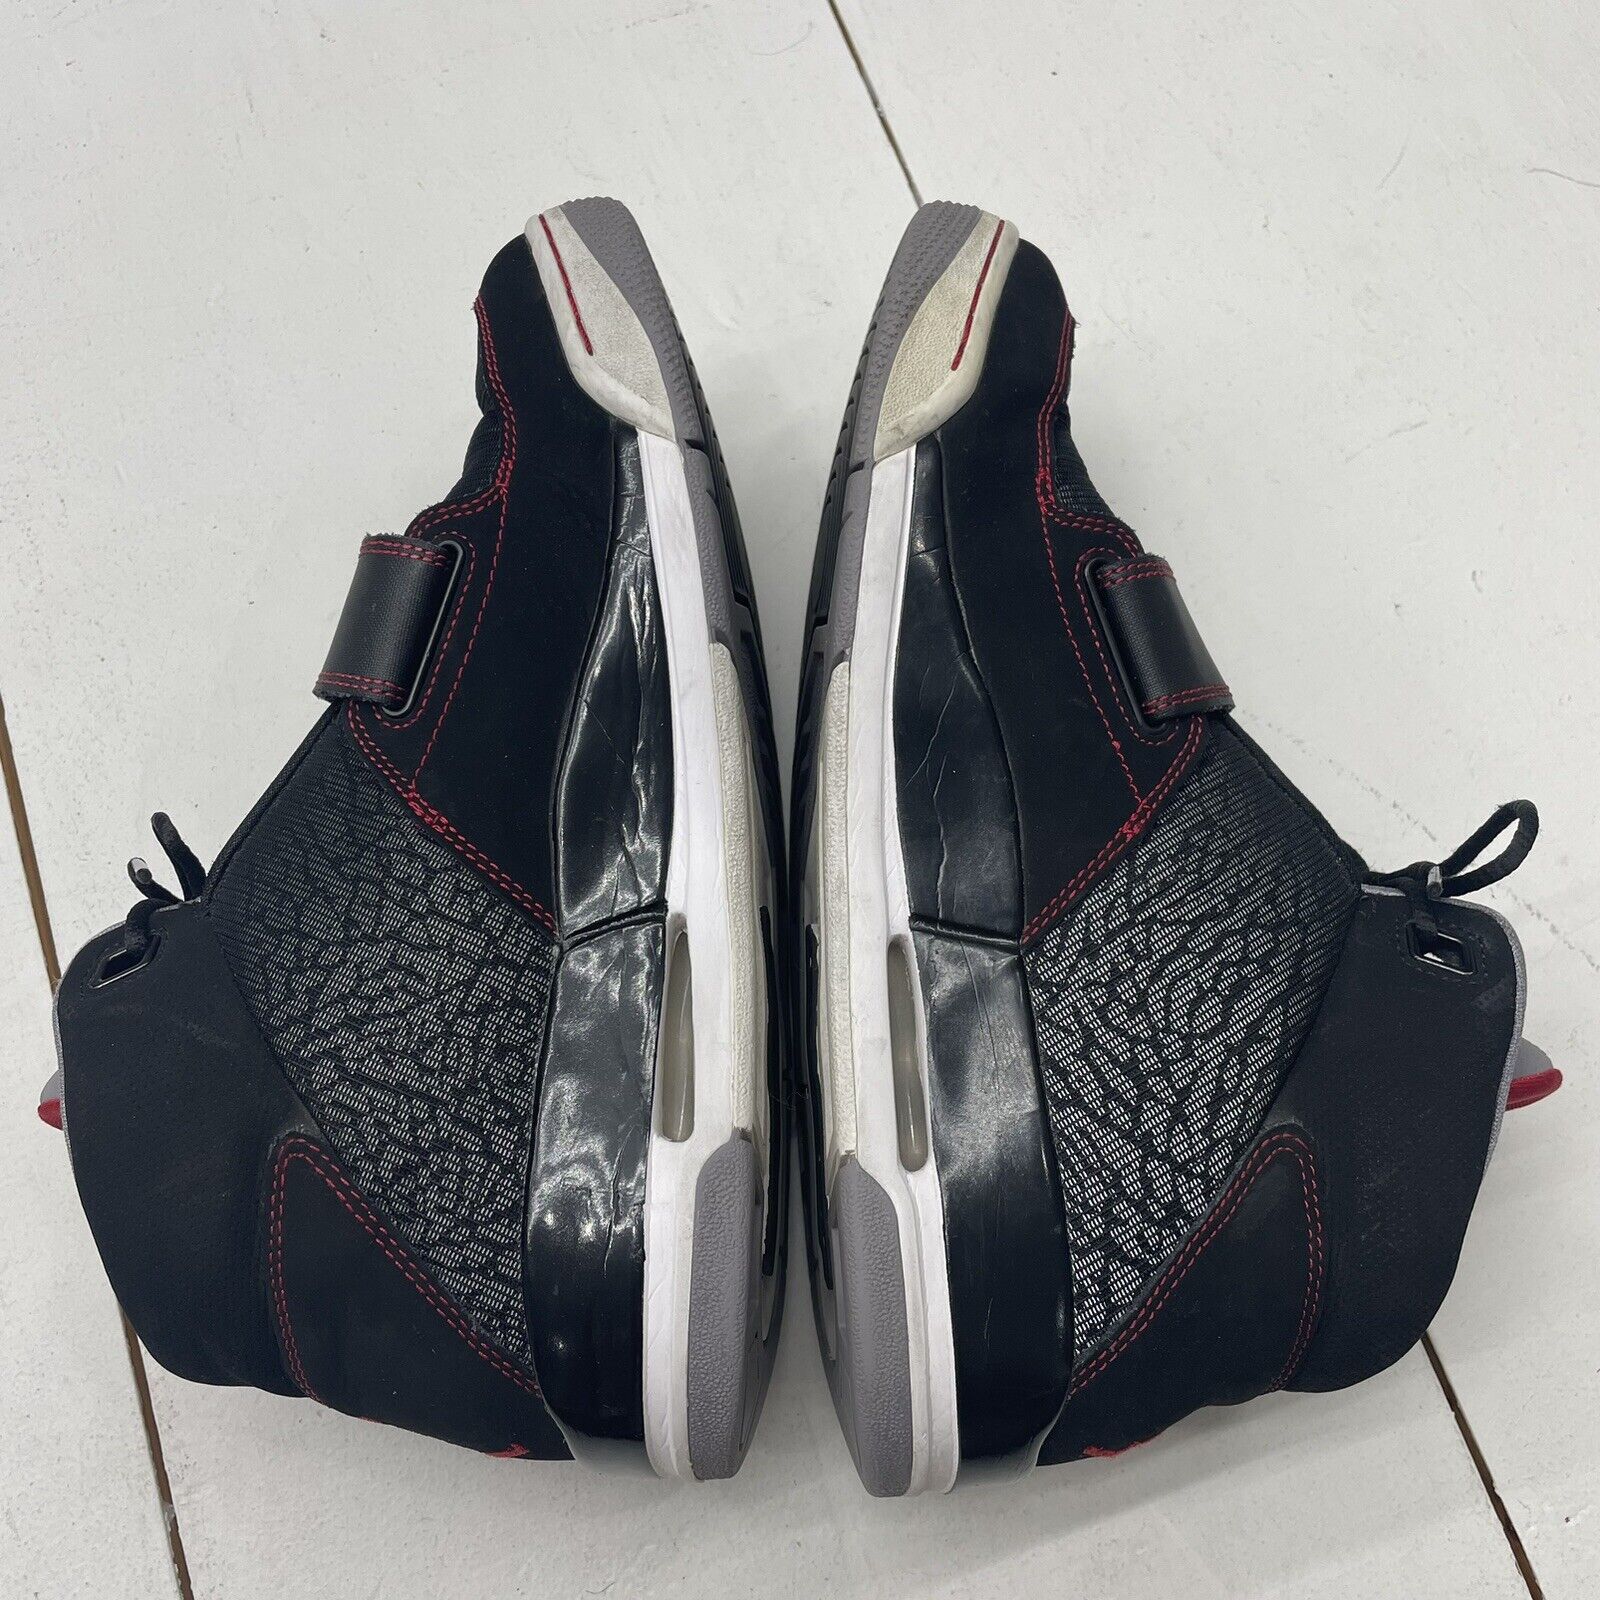 Nike Air Jordan Retro V IV III 543 Sneakers Grey Black 602661-003